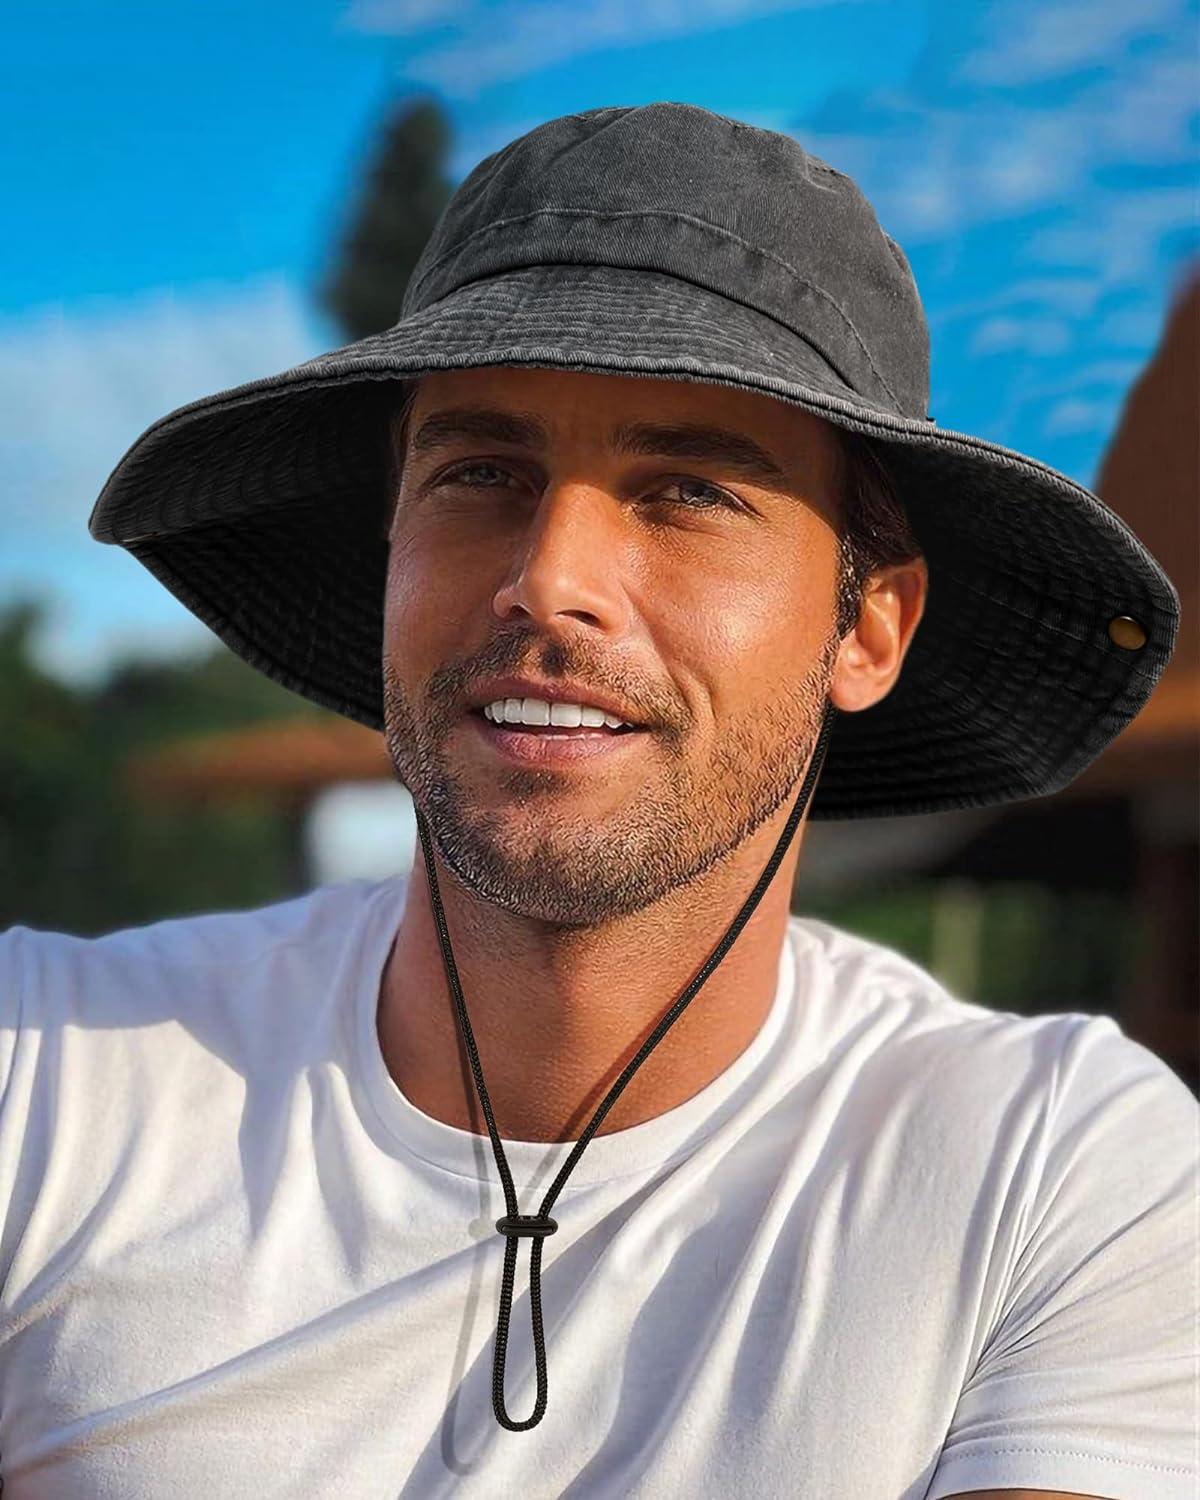 Custom Bucket Hat Personalized Sun Hat for Women Men Summer Vacation Travel  Beach Foldable Fishing Hat